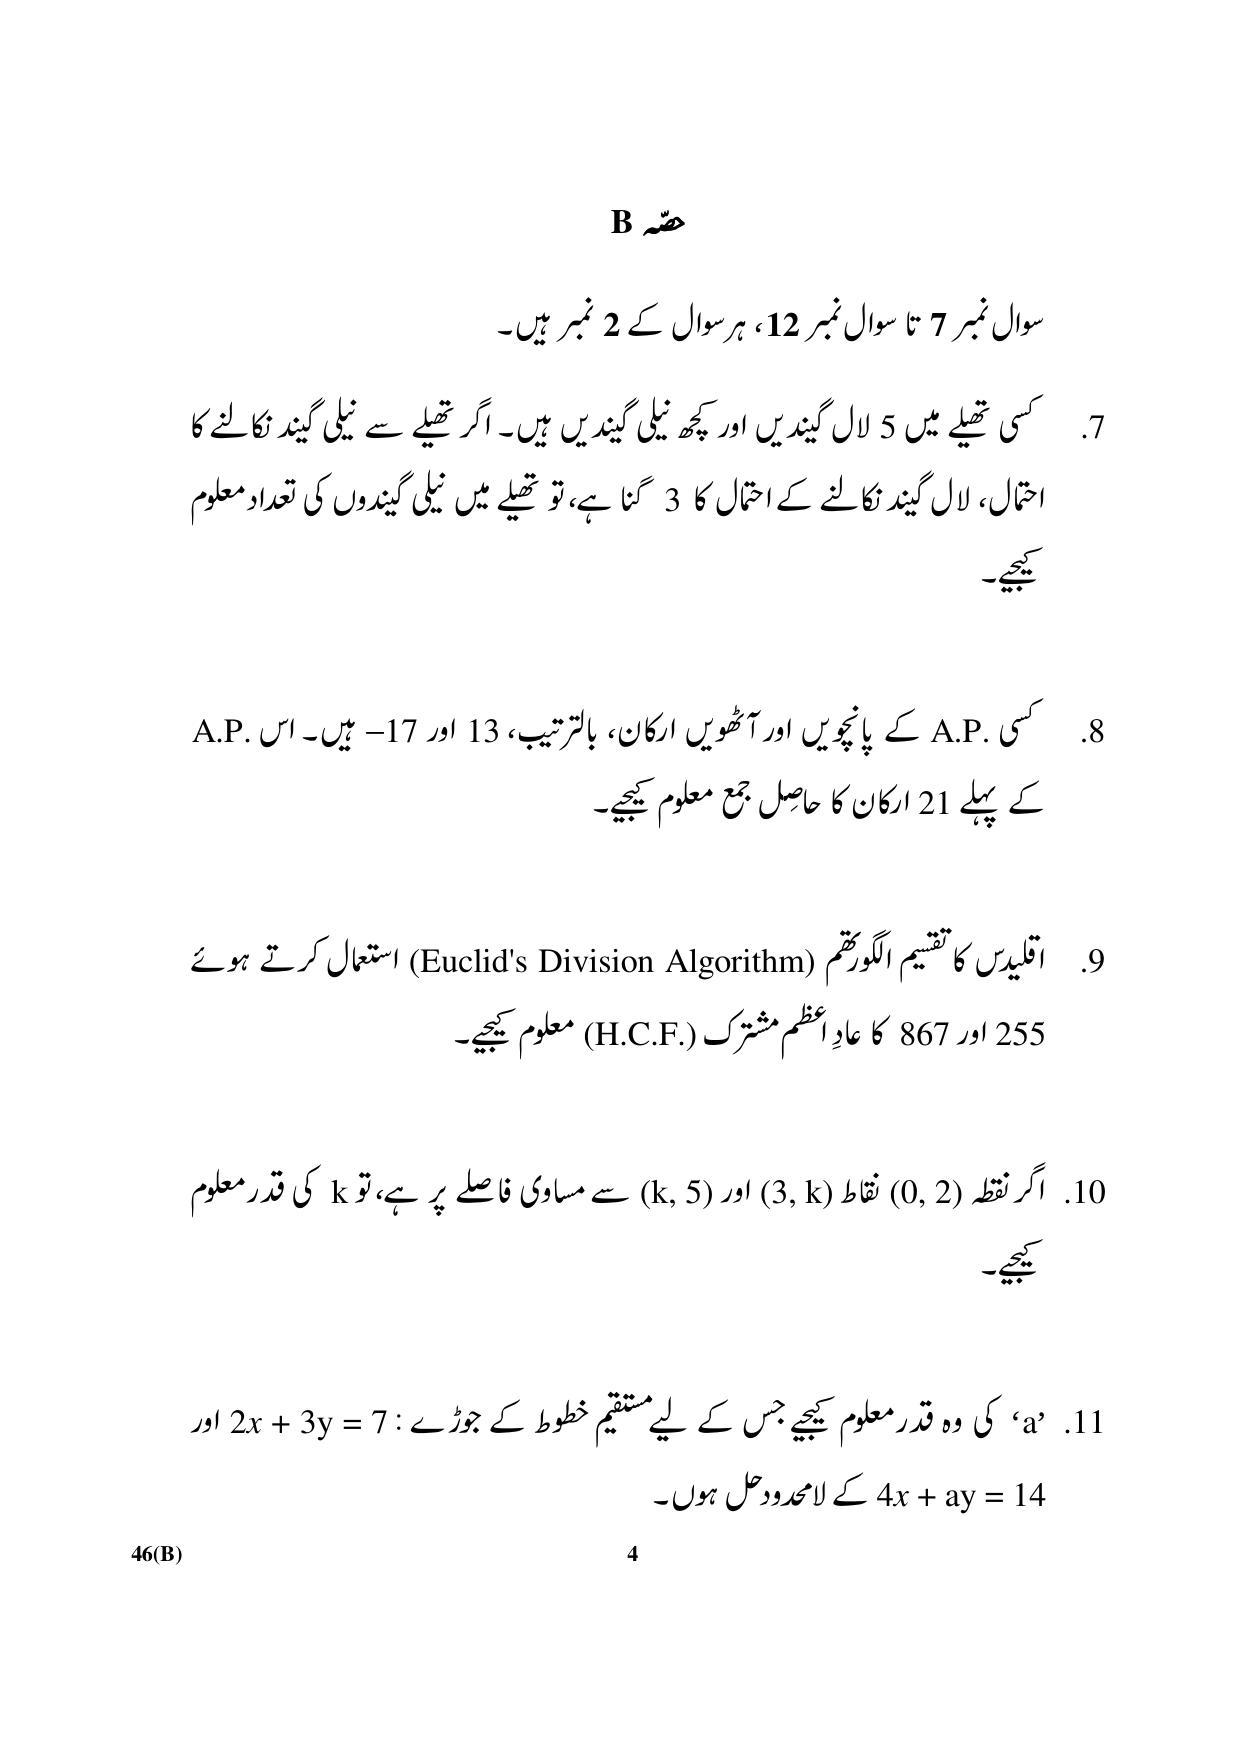 CBSE Class 10 46(B) Maths (For Blind) Urdu Version 2018 Question Paper - Page 4